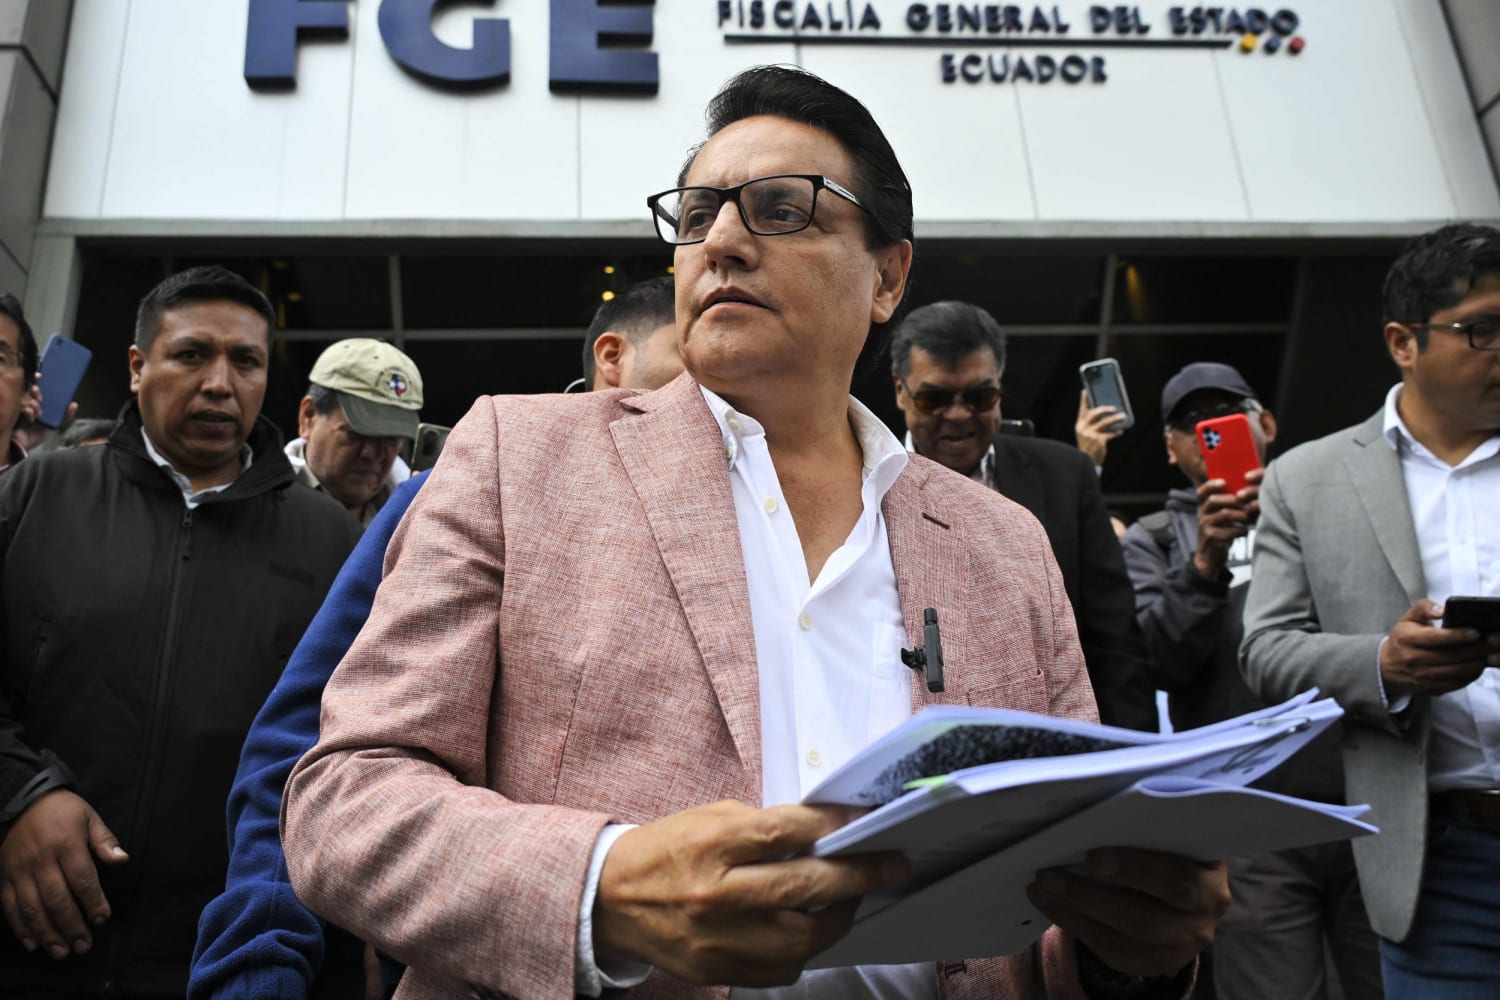 Assassinated Ecuadorian candidate stood up to organized crime